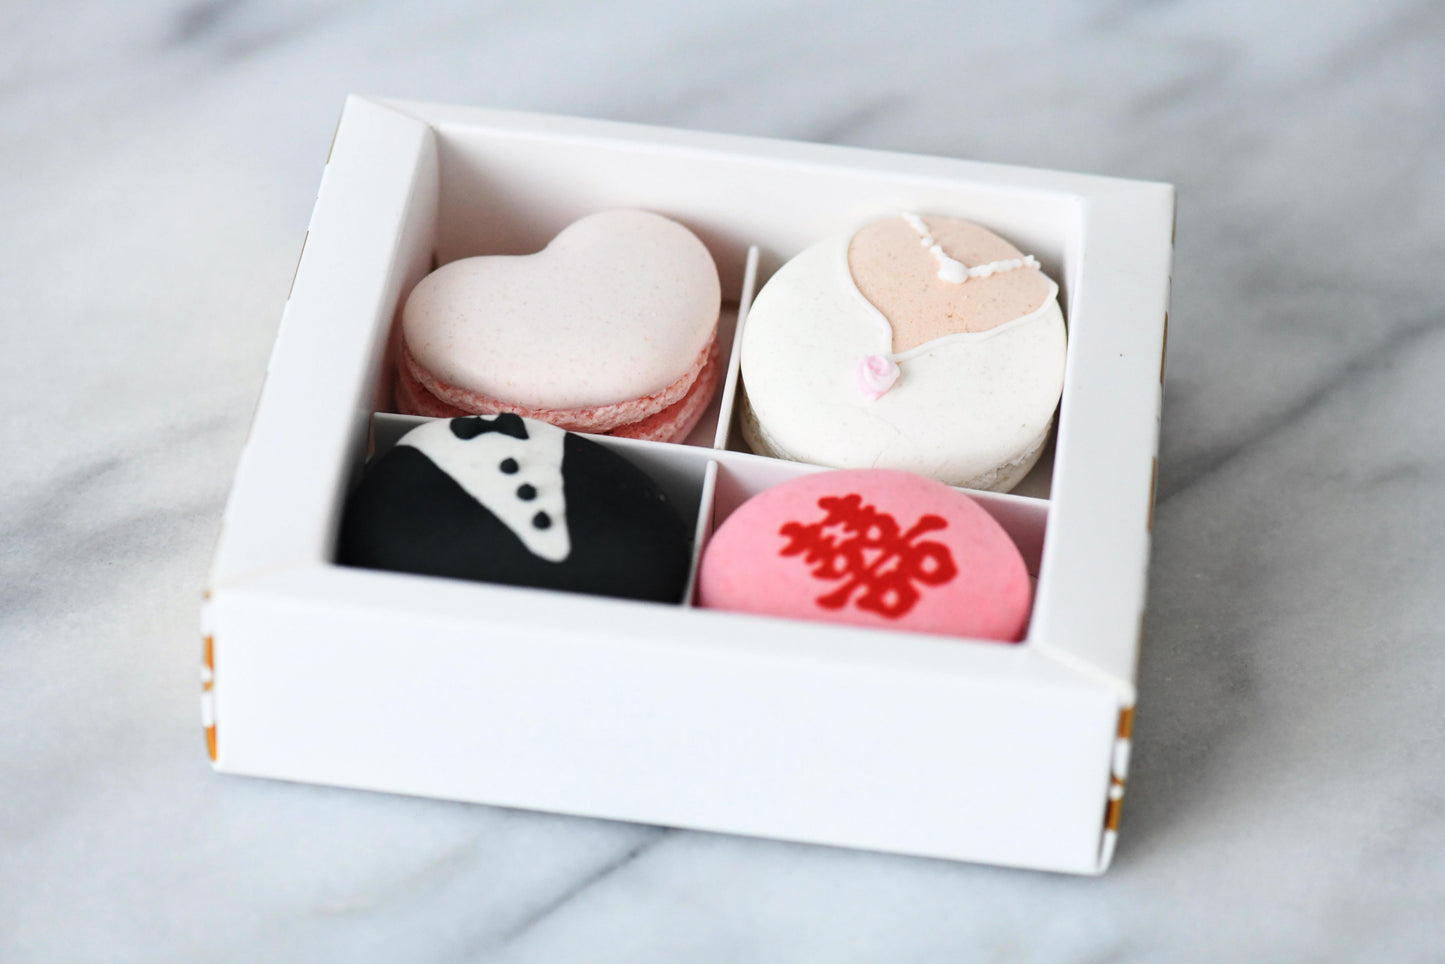 Wedding Bride & Groom Character Macarons | 4pcs Elegant Gift Box with Transparent Sleeve